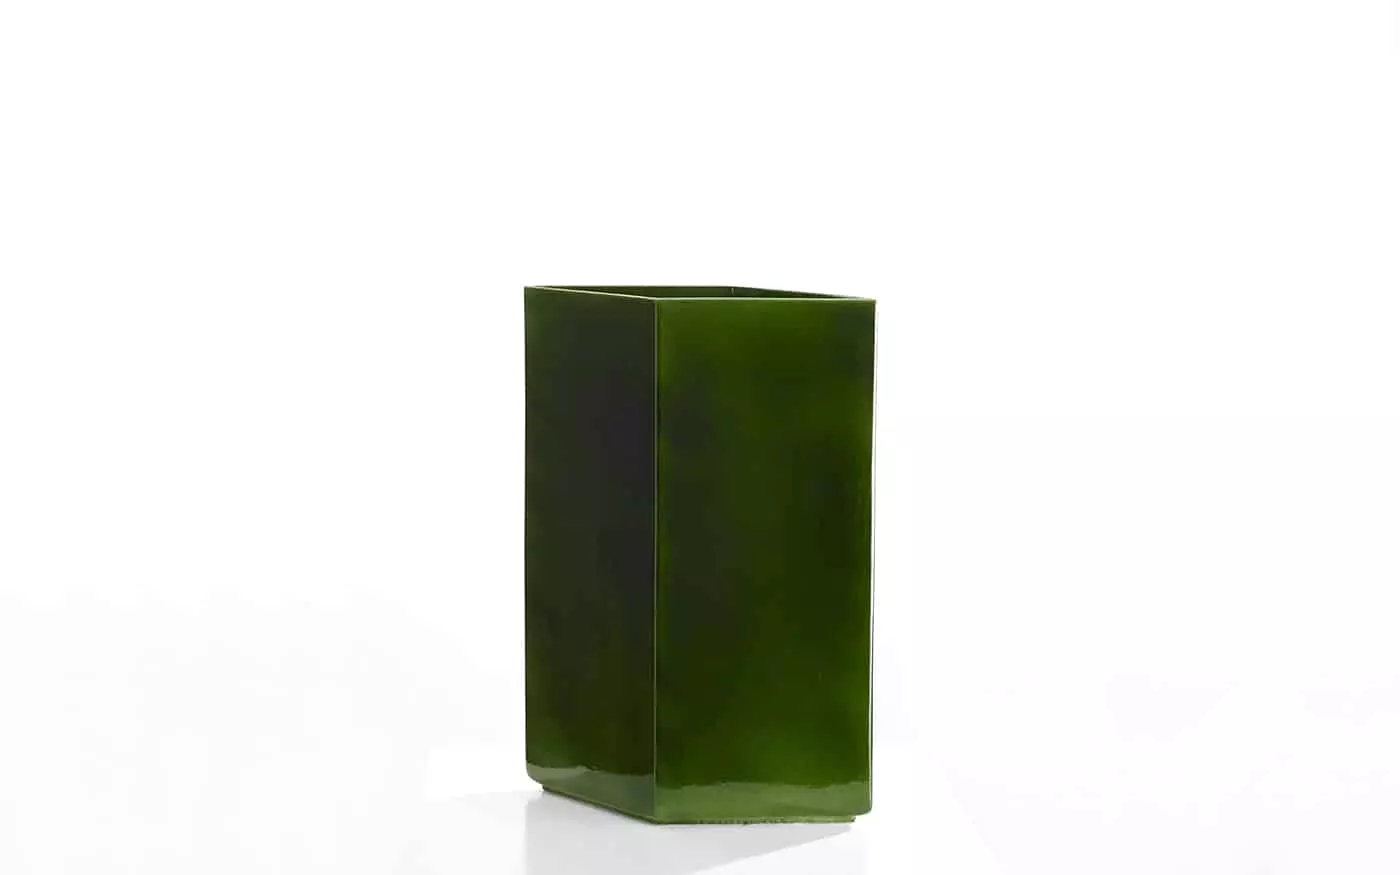 Vase Losange 67 green - Ronan & Erwan Bouroullec - Stool - Galerie kreo